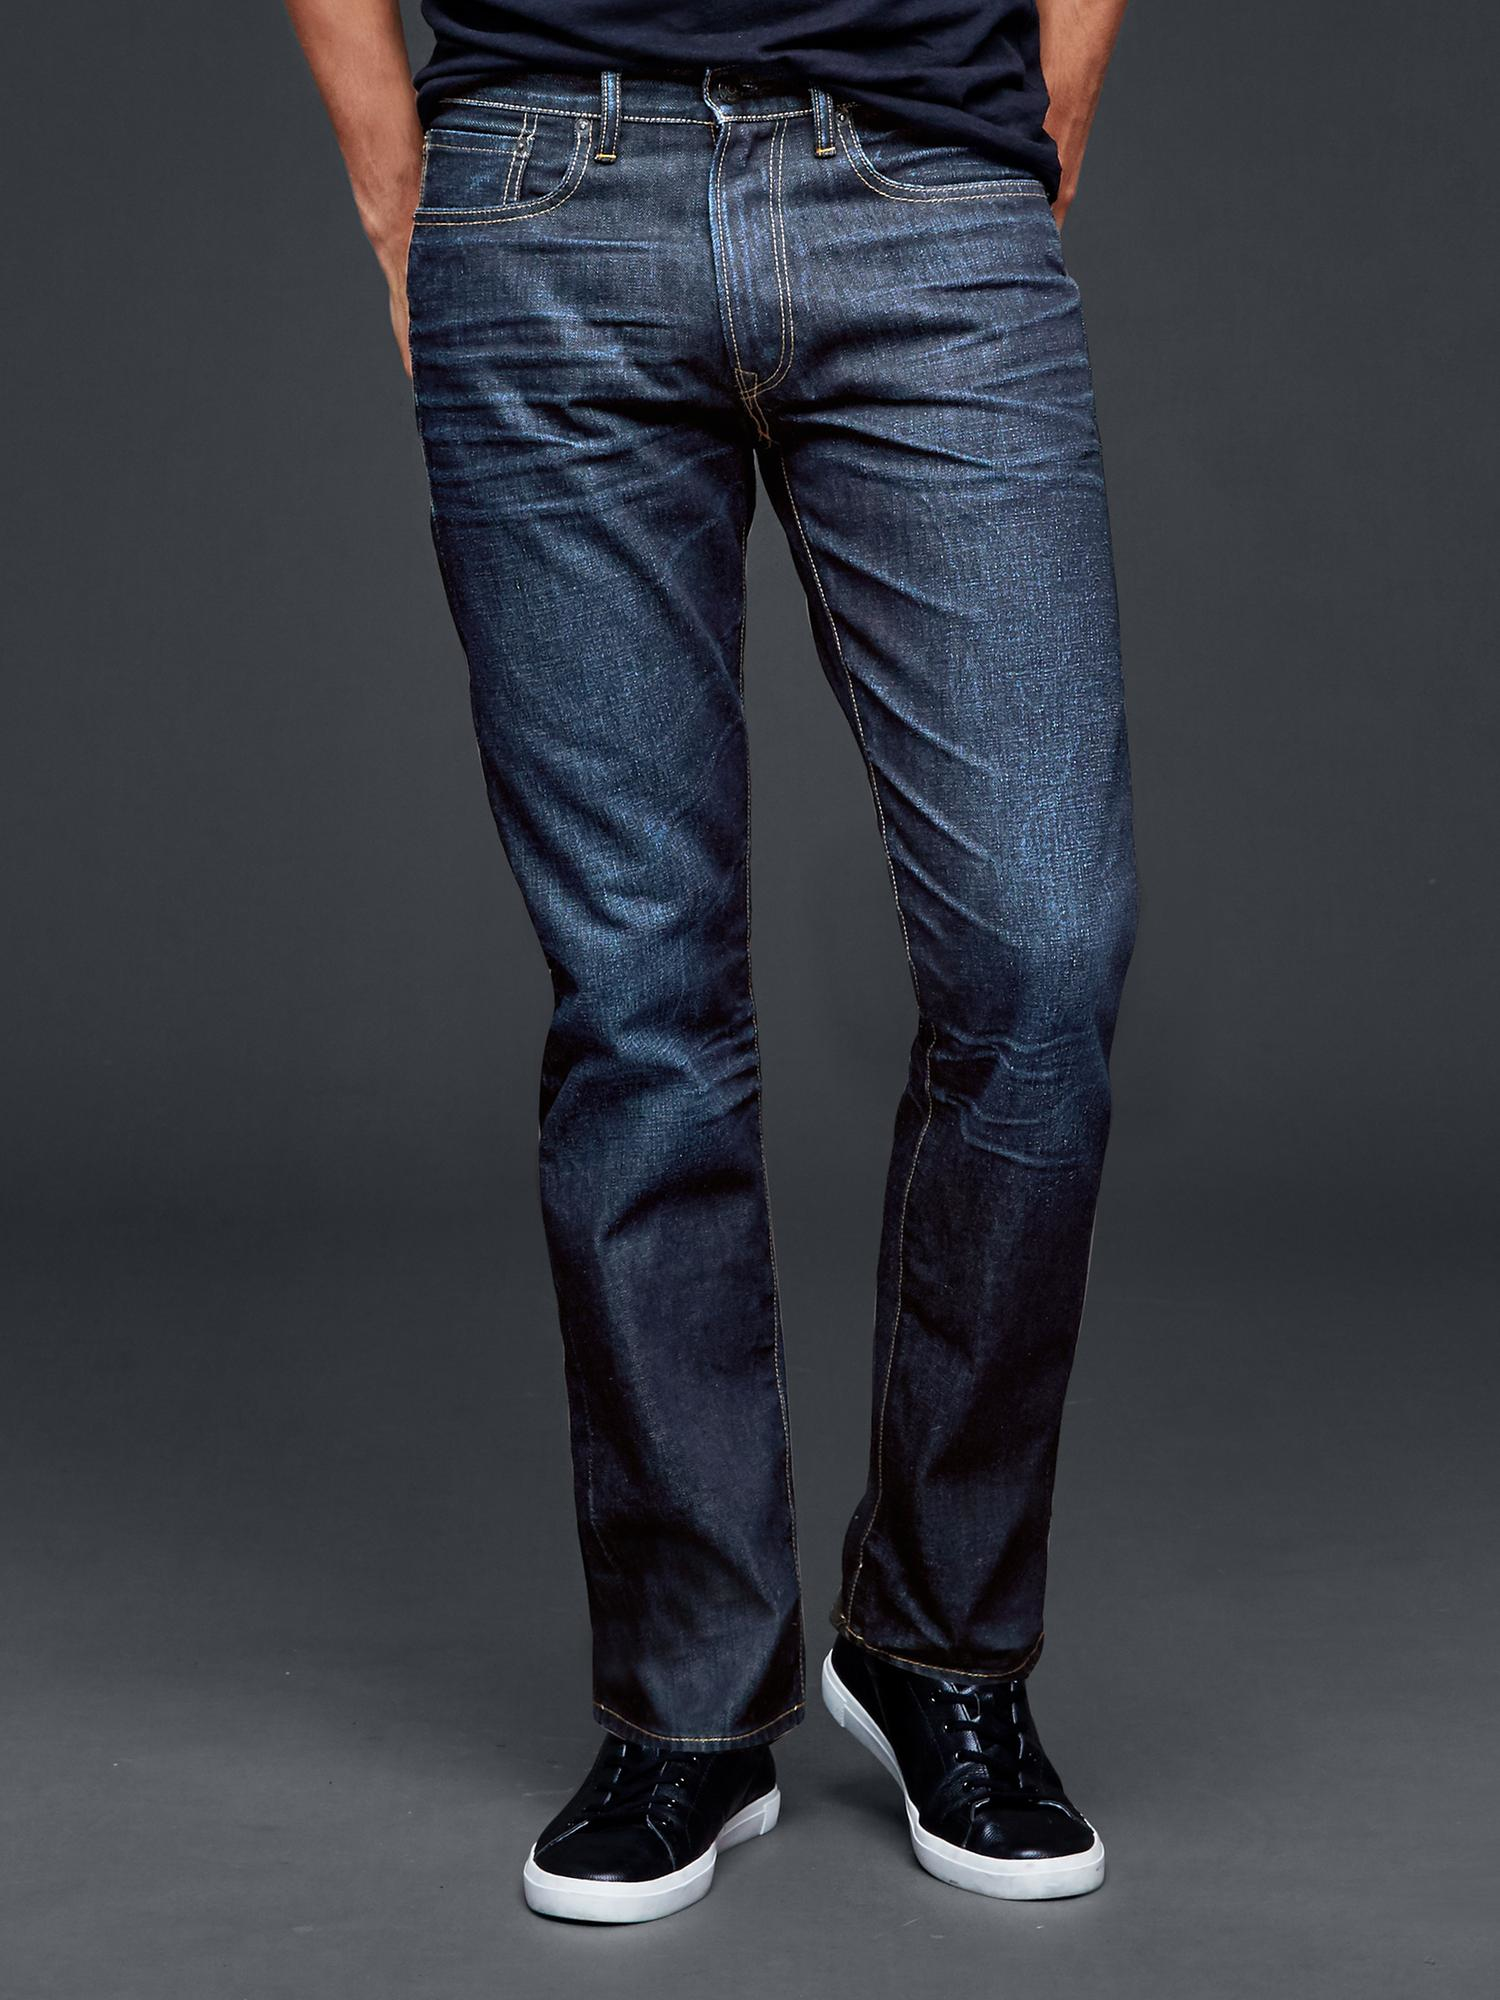 Lyst - Gap 1969 Standard Taper Fit Jeans (dark Resin Wash) in Blue for Men